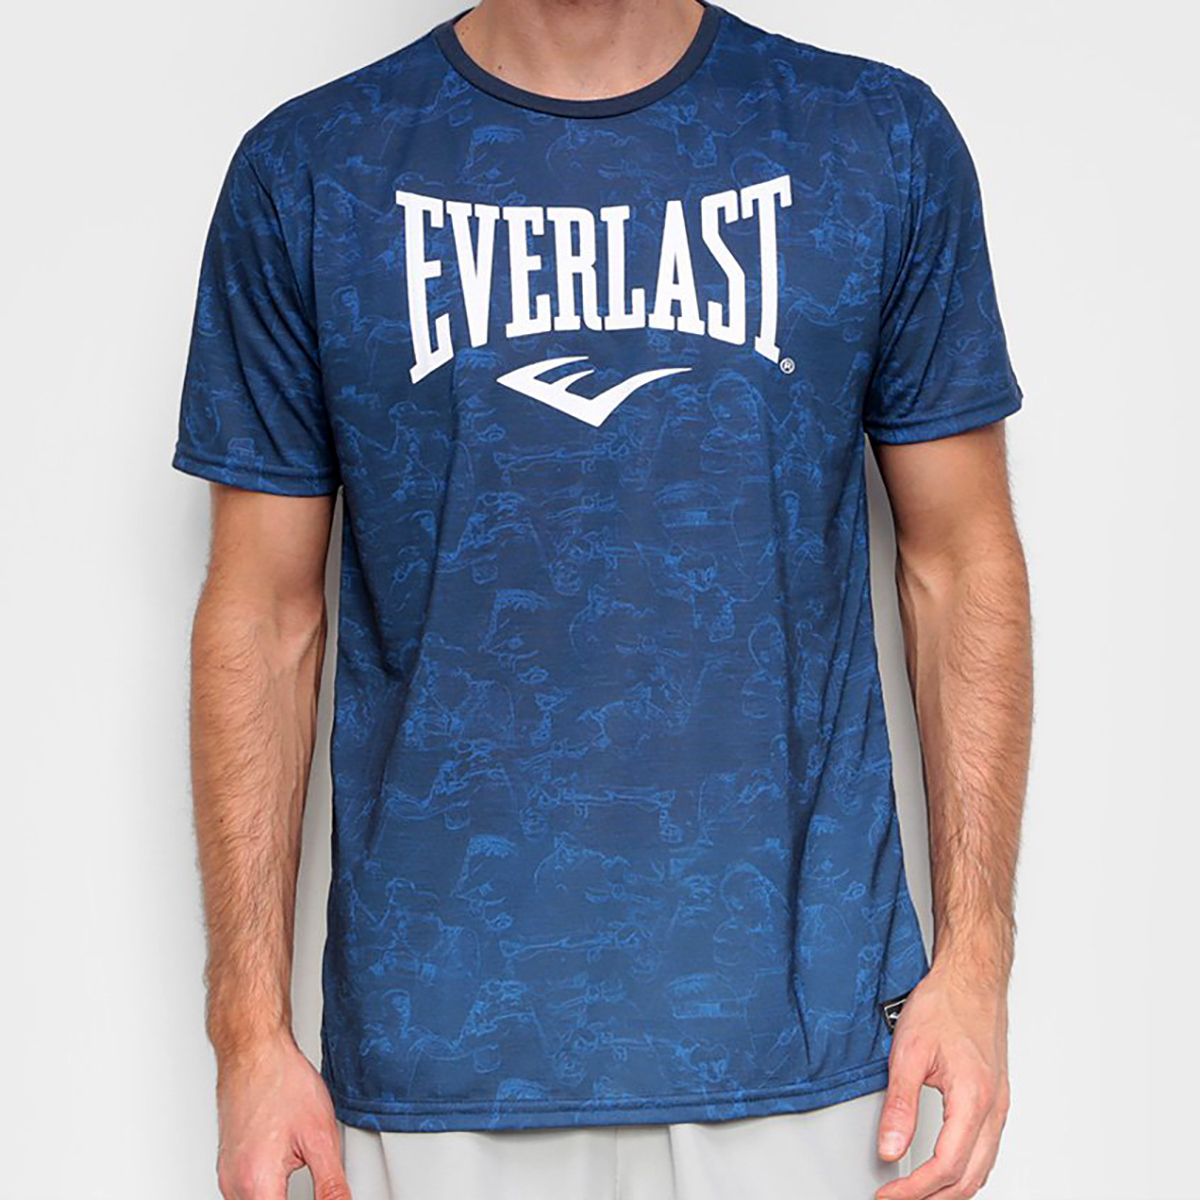 https://www.cabanamagazine.com.br/image/cache/catalog/Camisetas/Everlast/CEMA09D/camiseta-everlast-estampada-masculina-azul-1200x1200.jpg